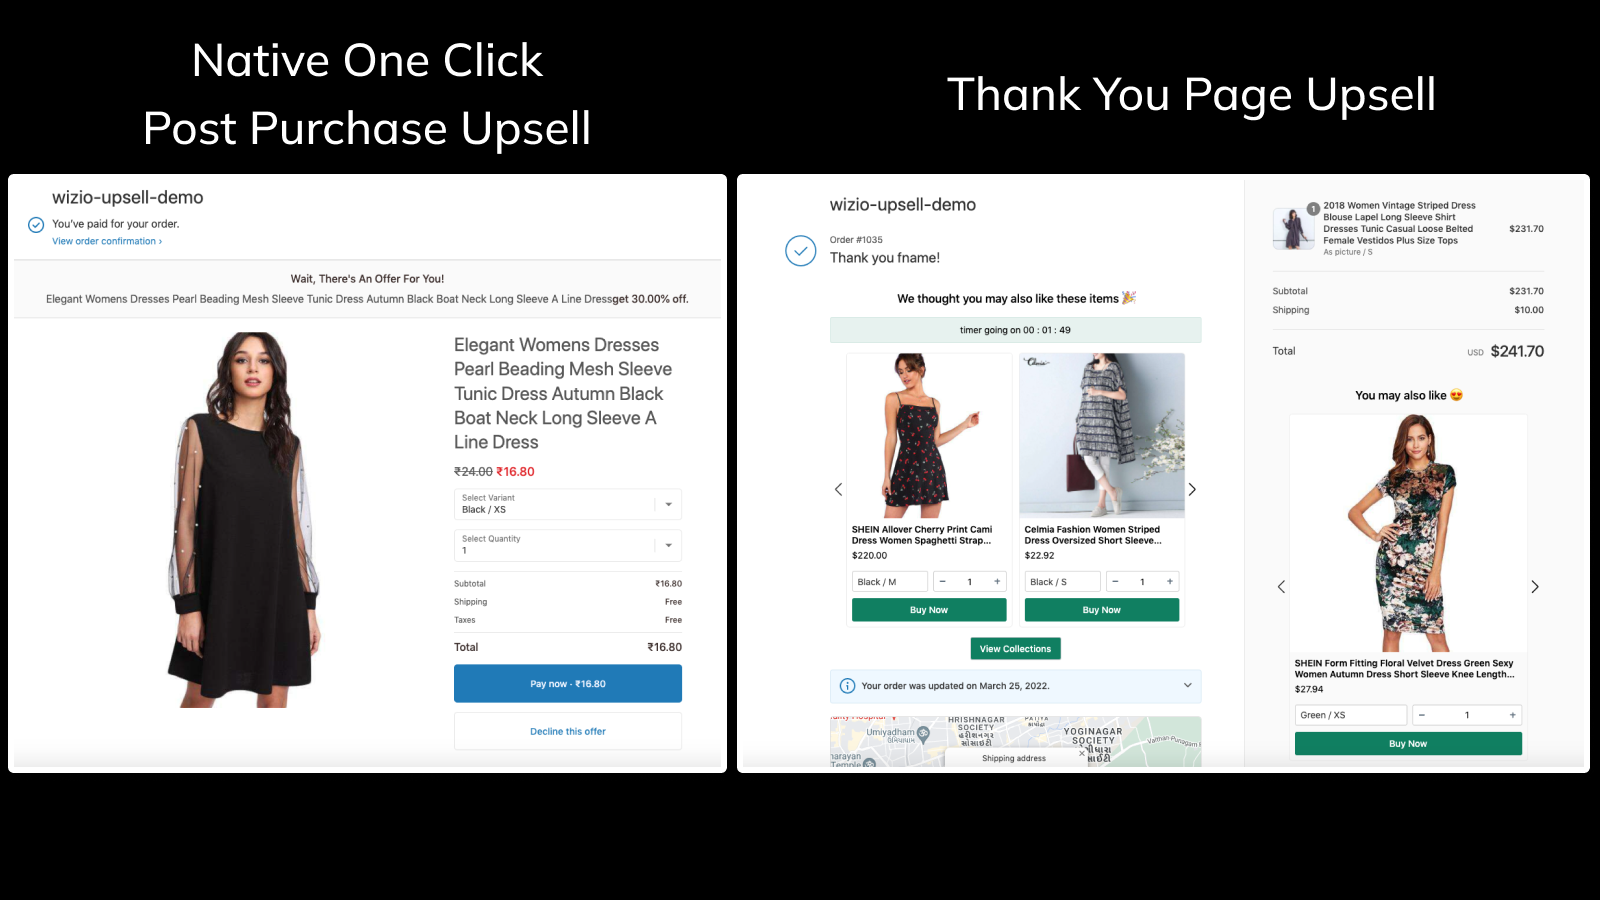 natives One-Click-Post-Purchase und Dankesseite Upsell